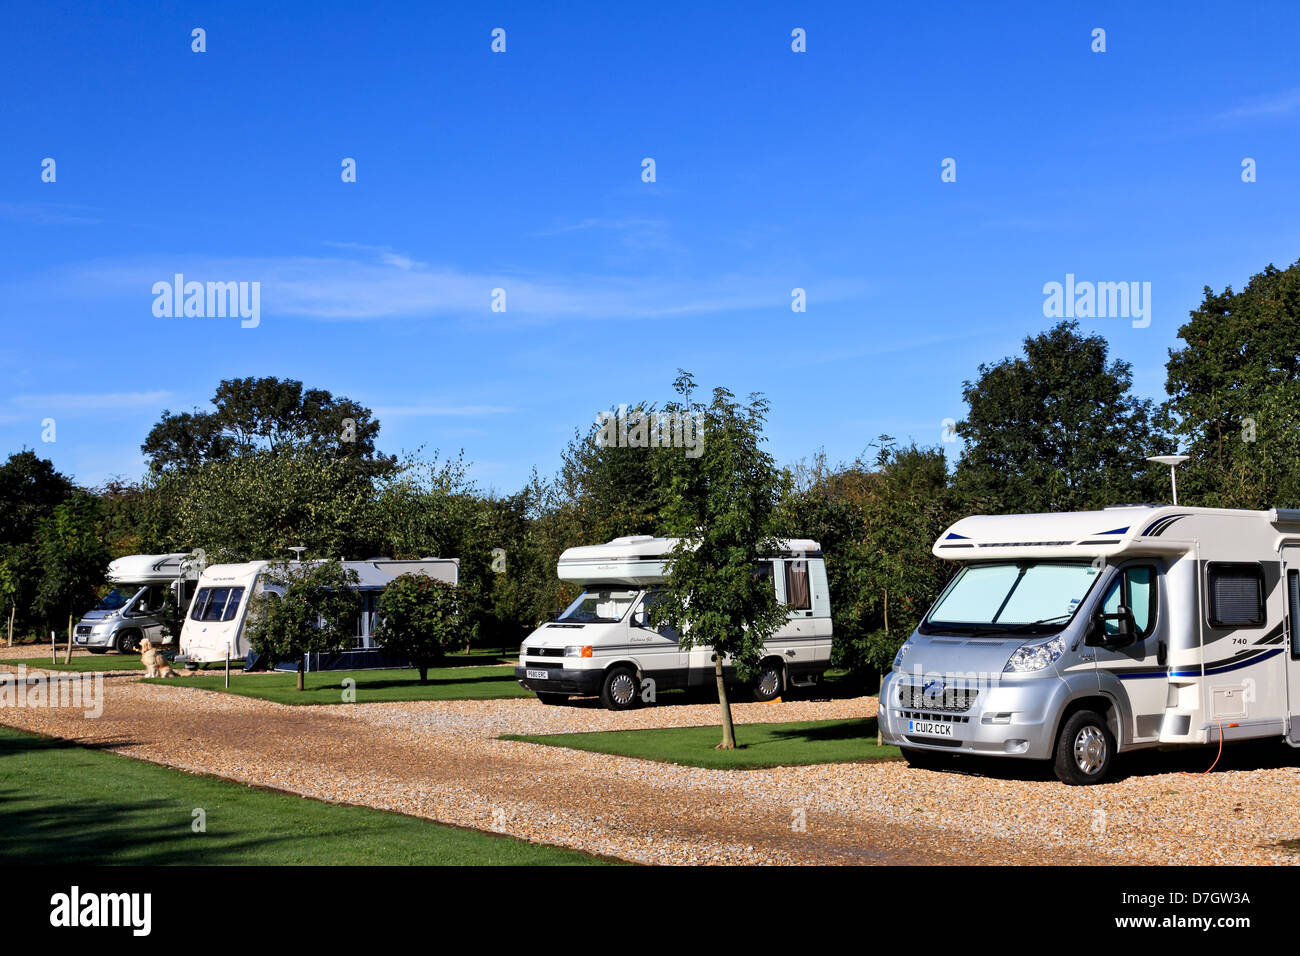 8863. Chew Valley Camp Site, (Caravan Club), Somerset, England, UK Banque D'Images